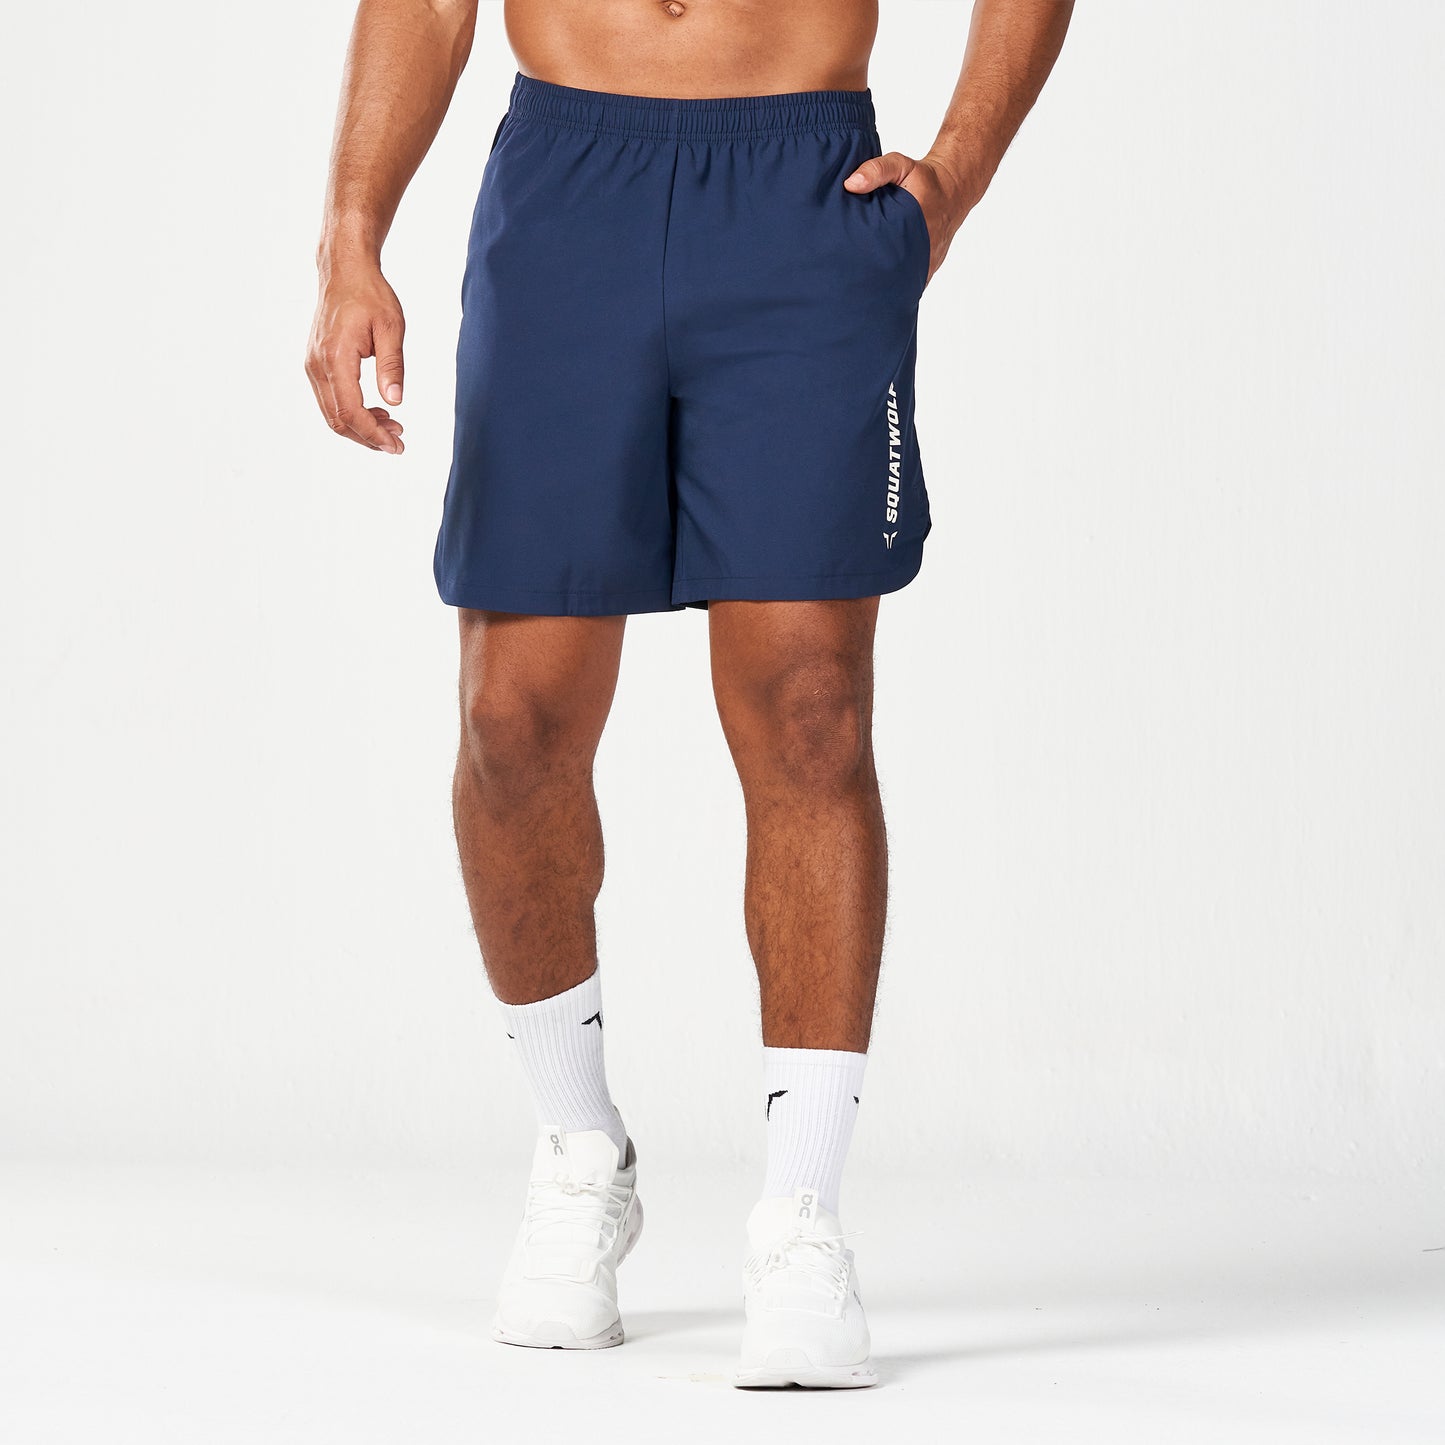 Warrior 7" Shorts 2.0 - Navy